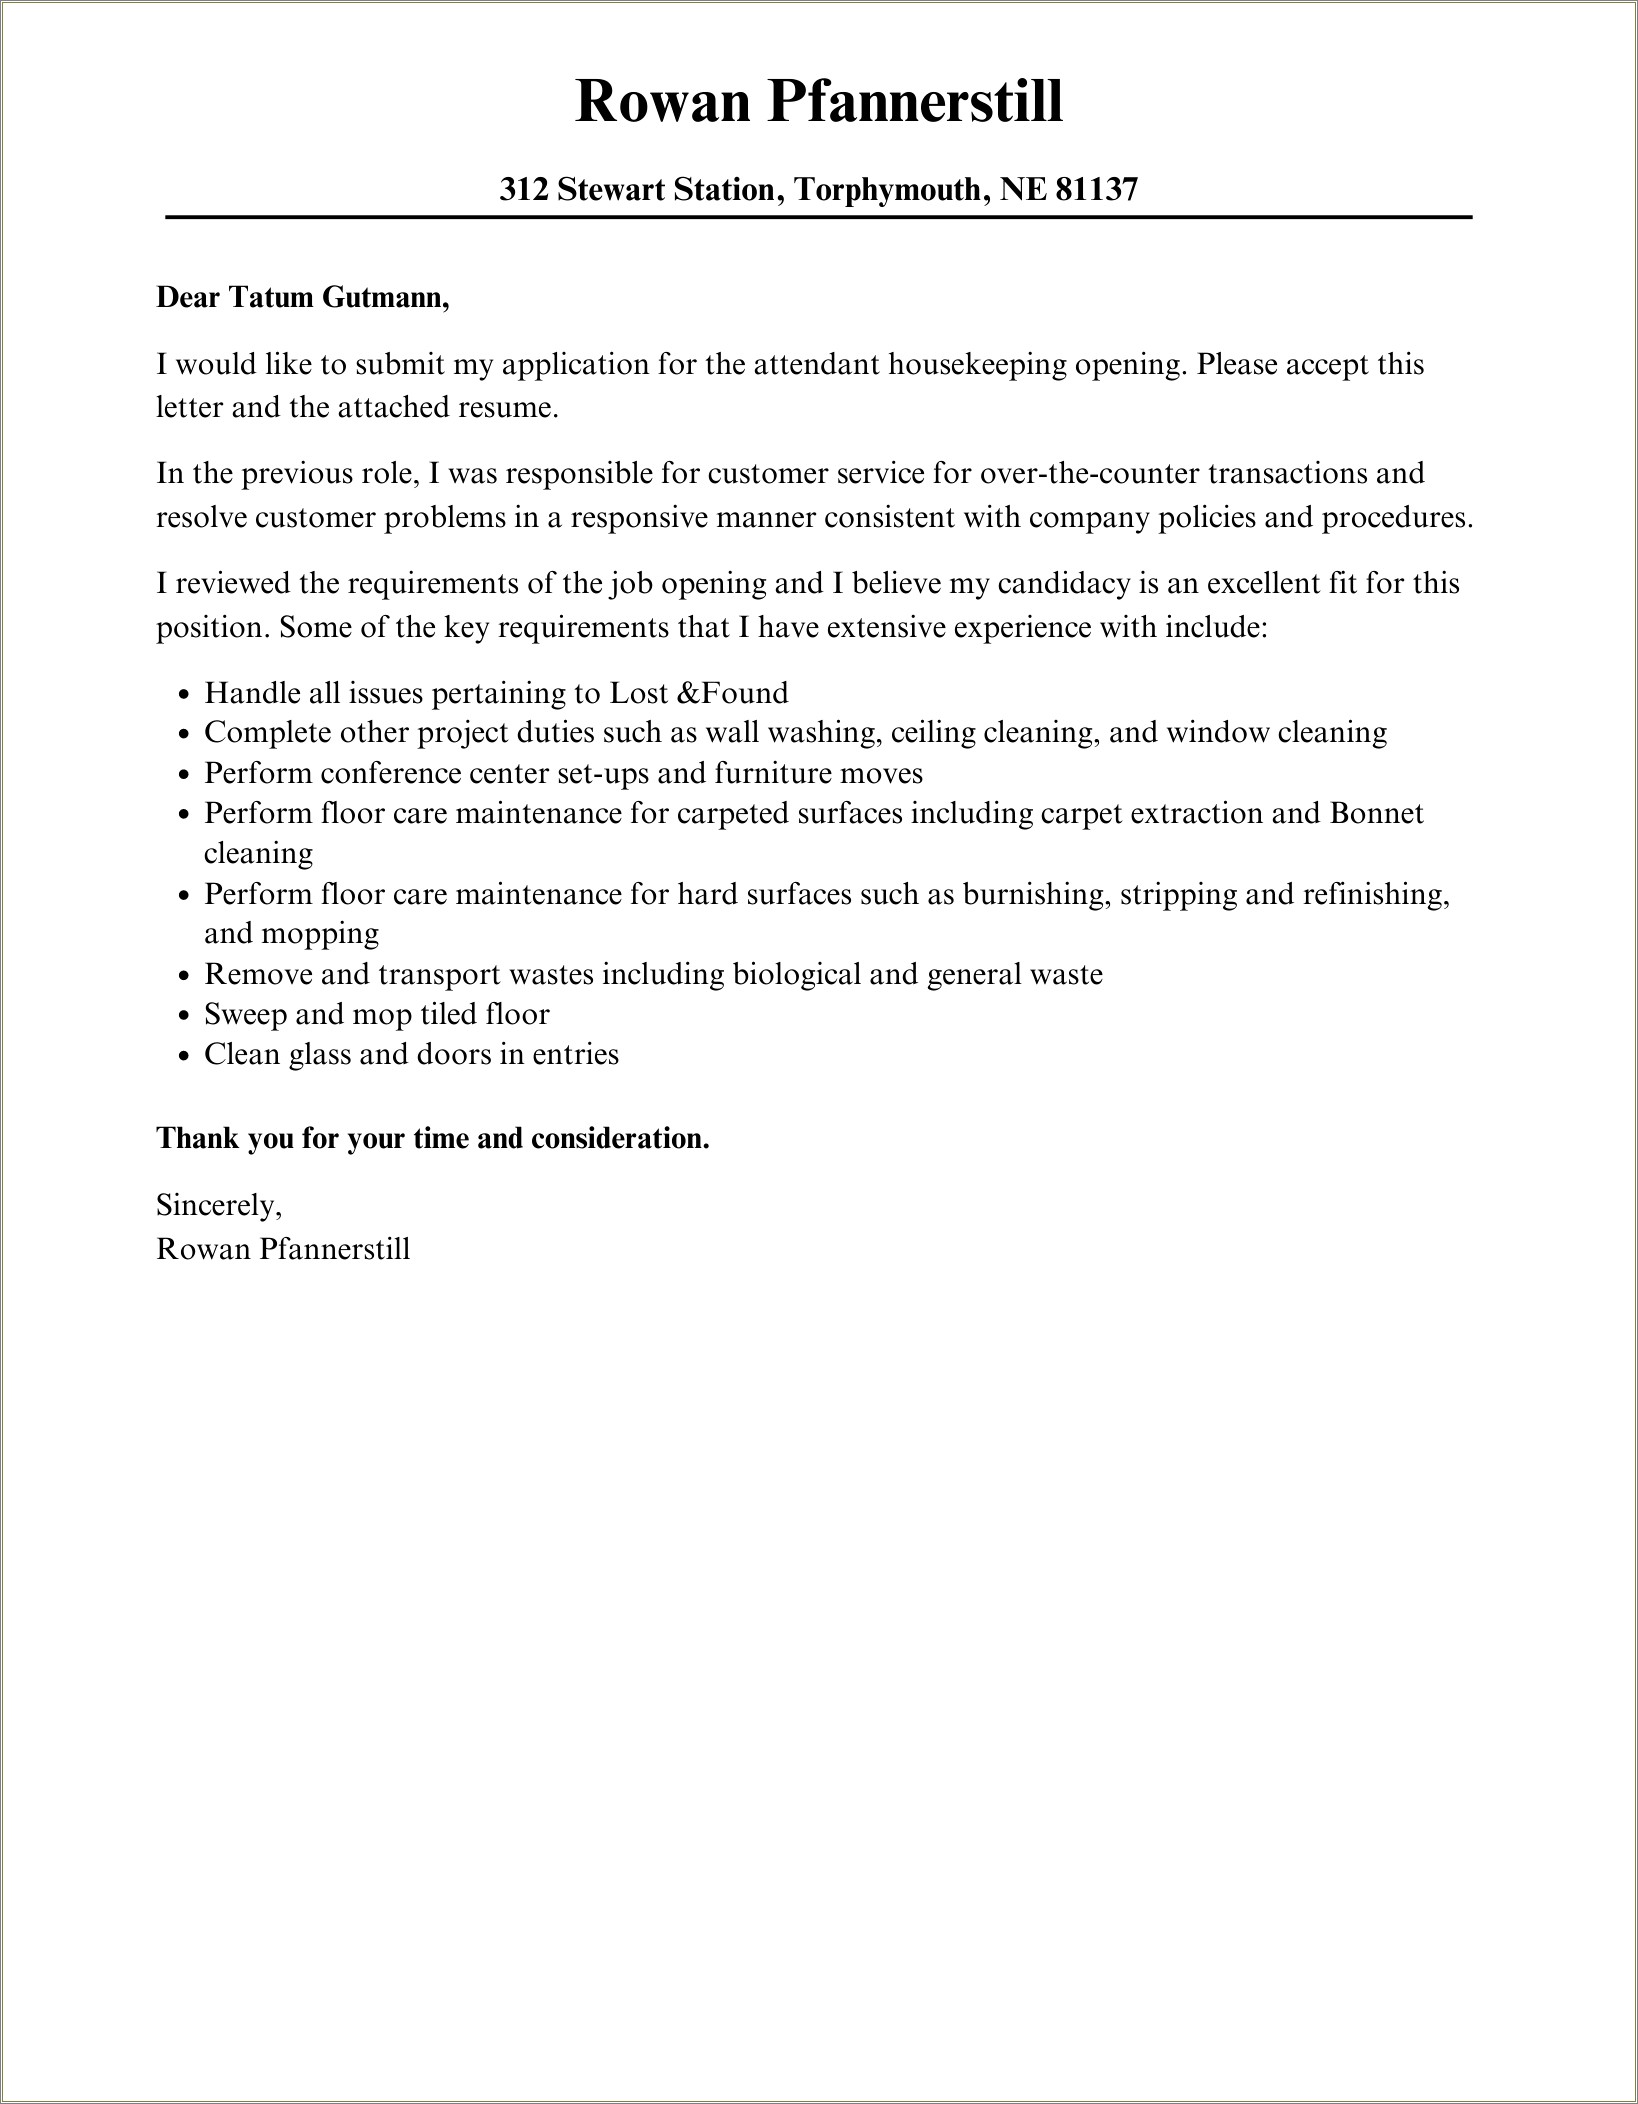 Resume Cover Letter For Housekeeping Job